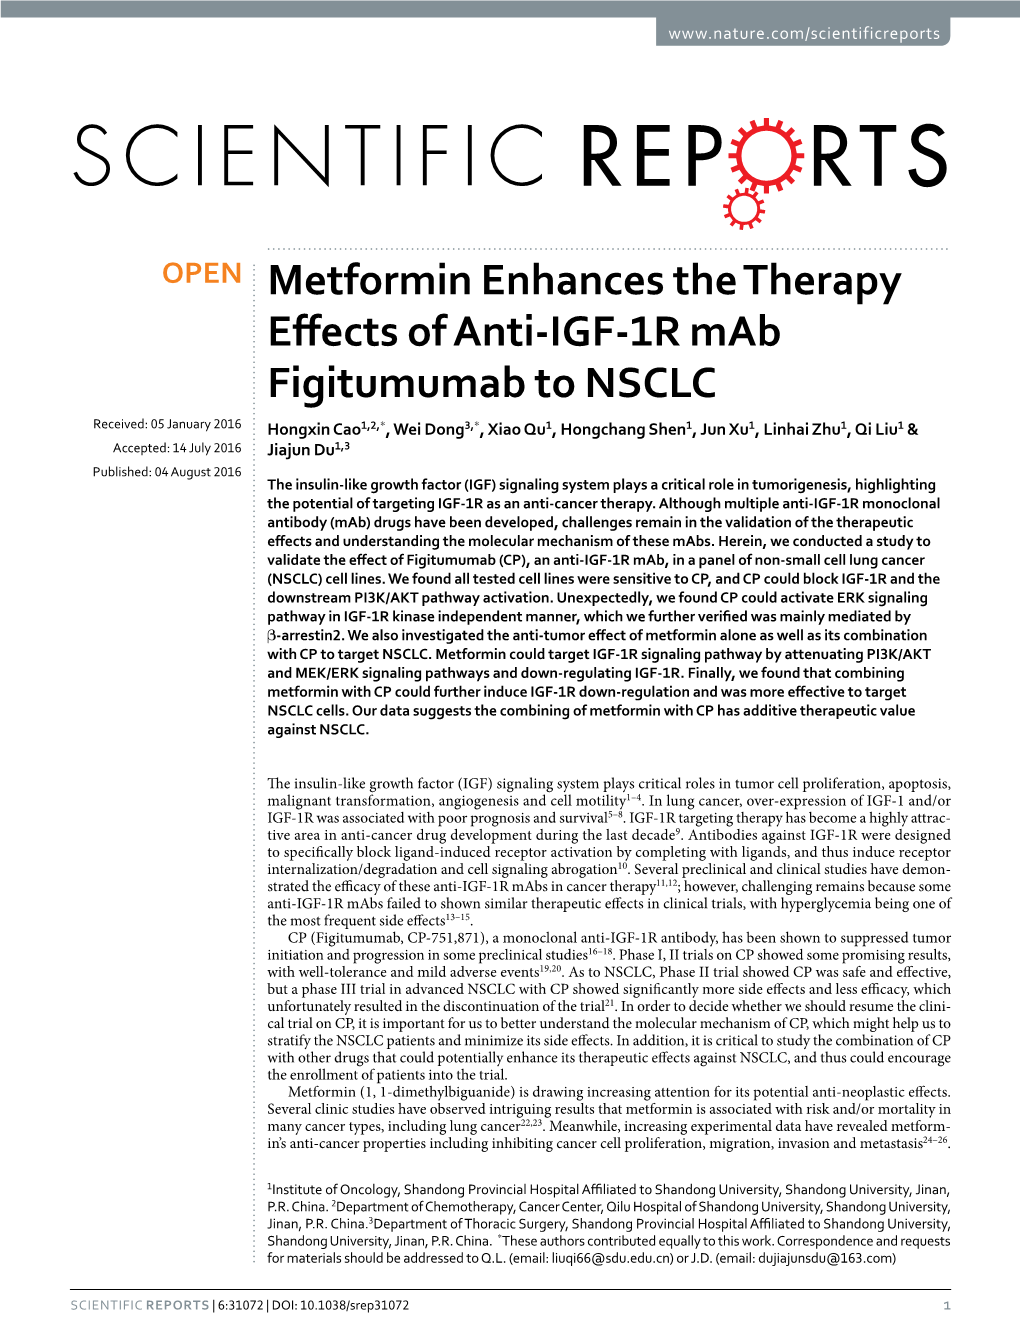 Metformin Enhances the Therapy Effects of Anti-IGF-1R Mab Figitumumab to NSCLC